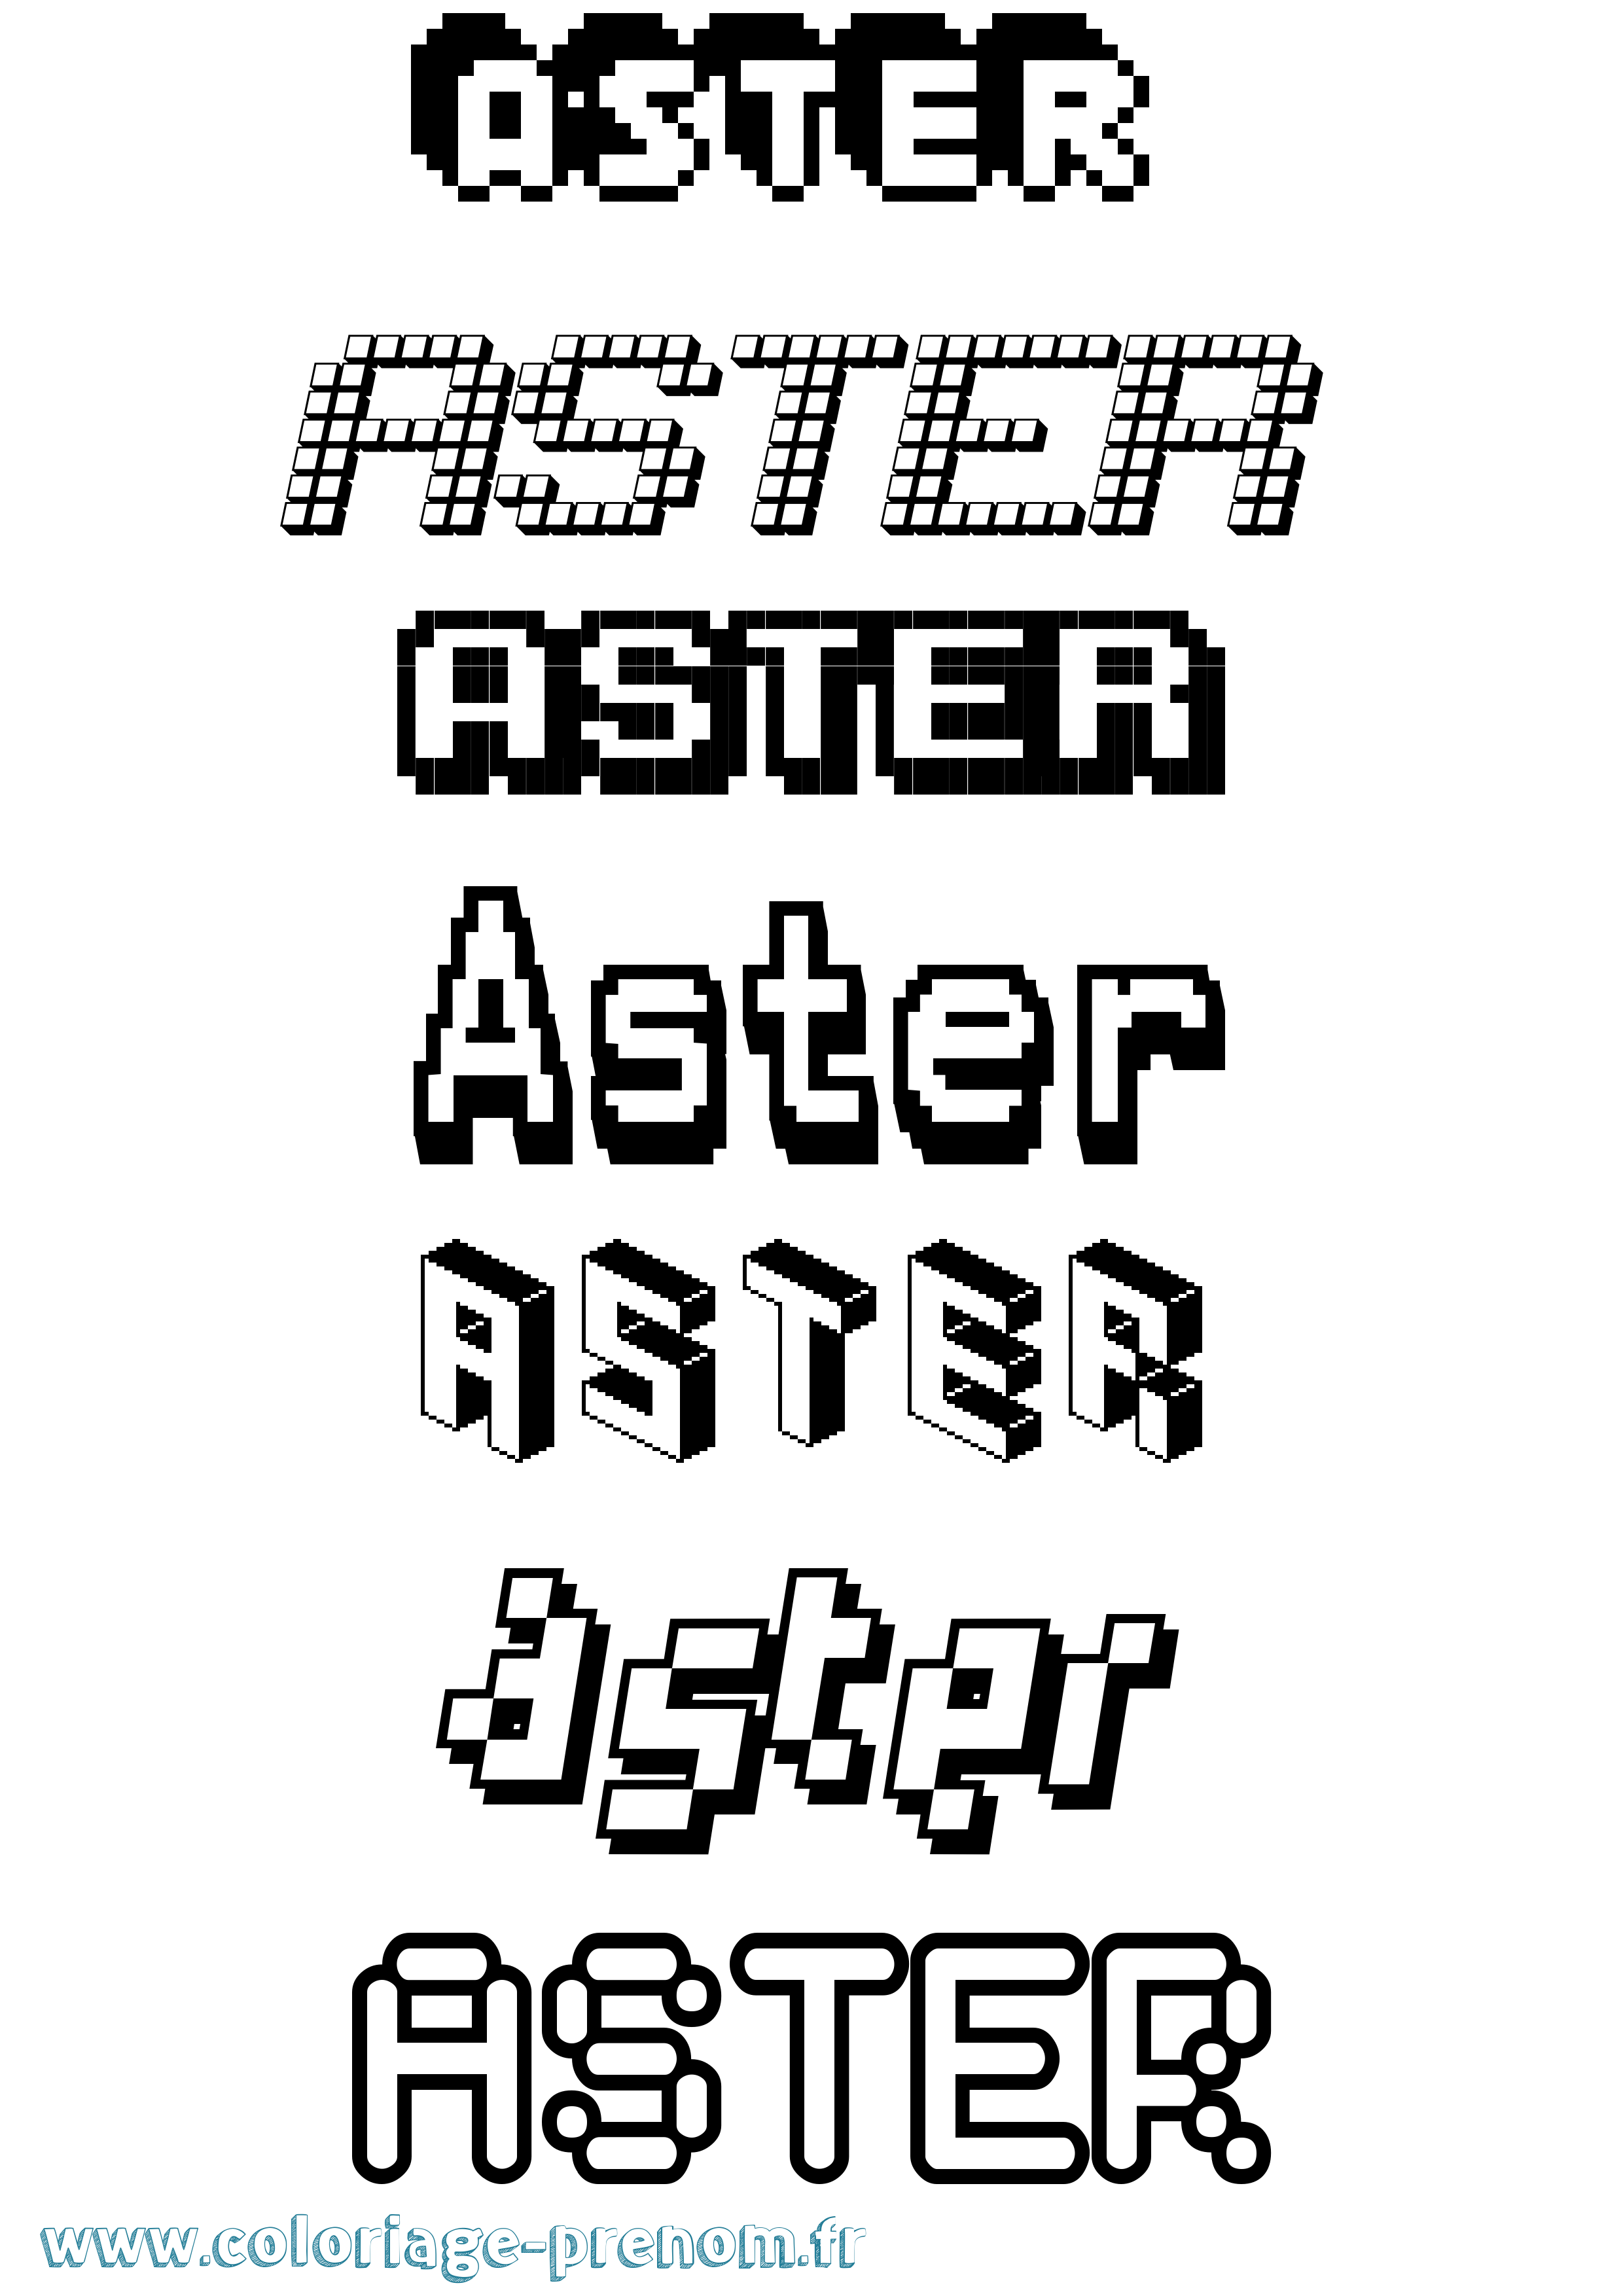 Coloriage prénom Aster Pixel